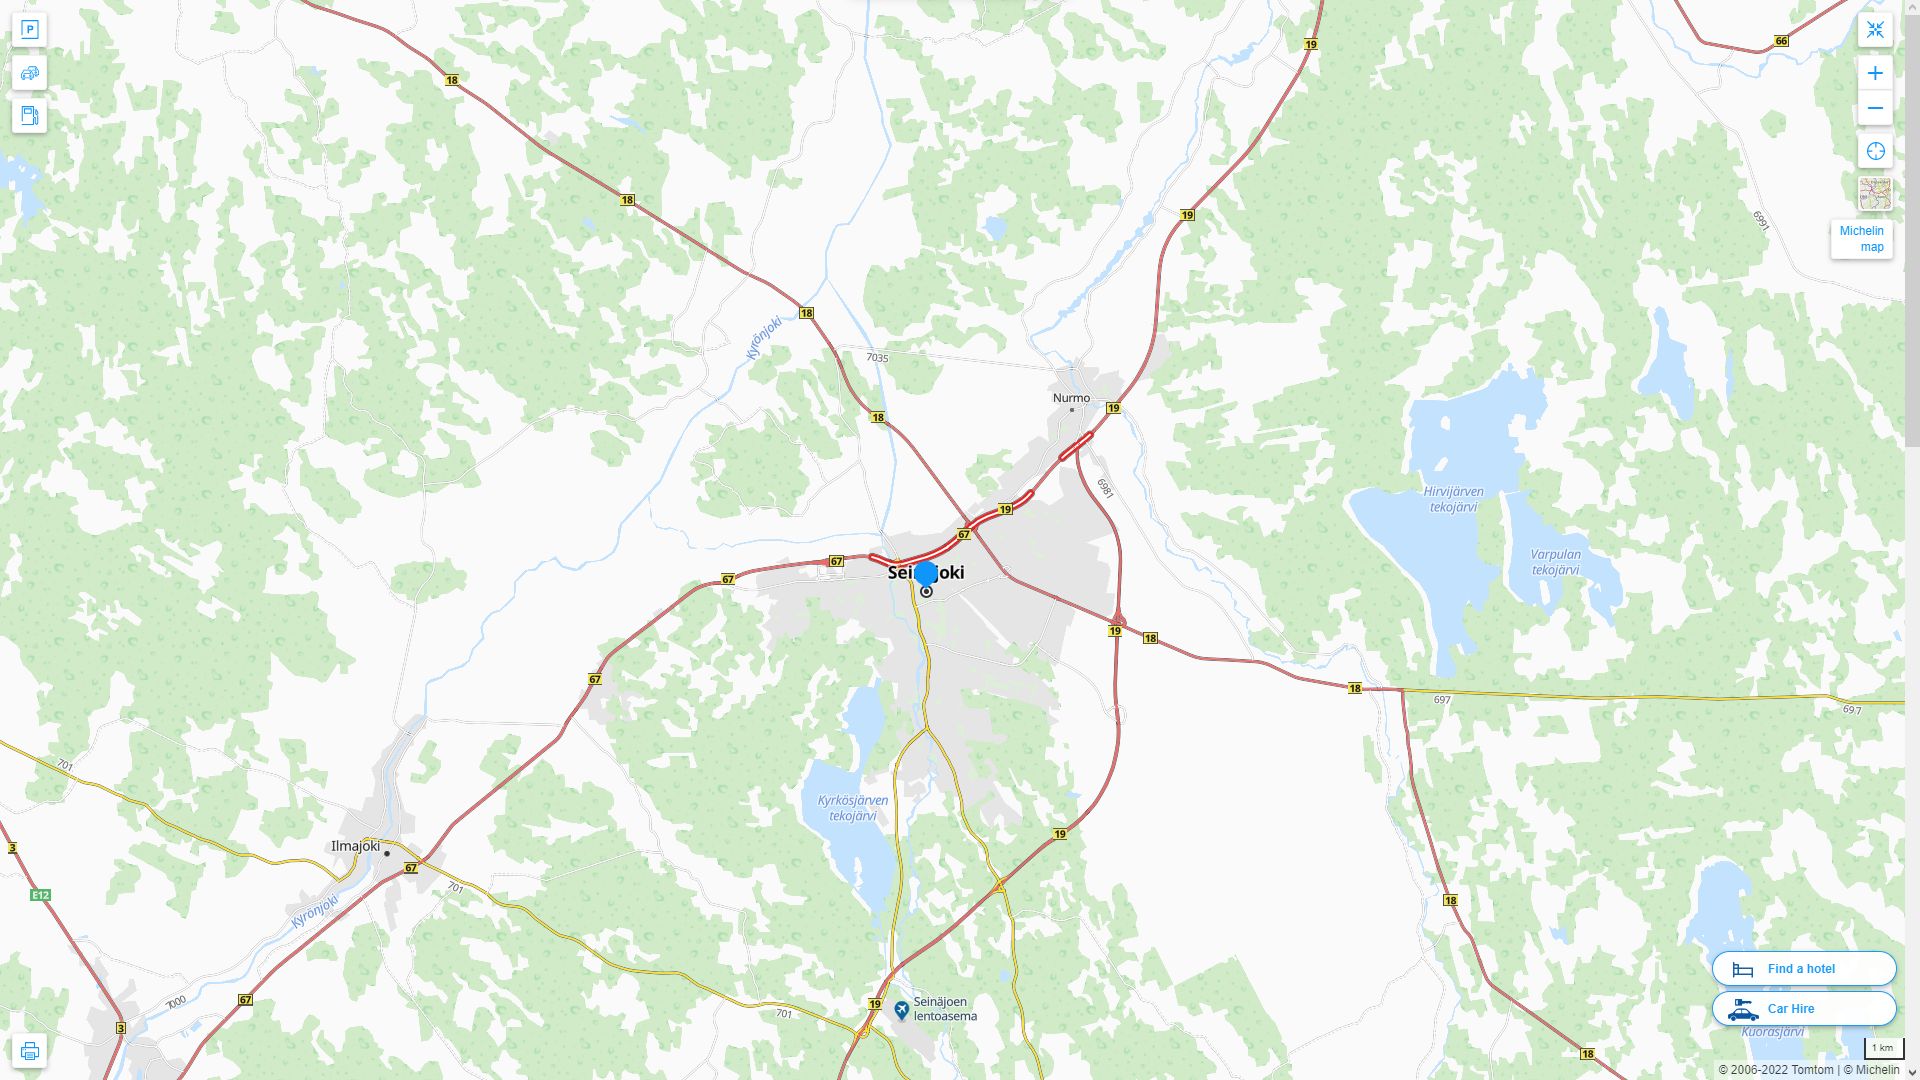 Seinajoki Finlande Autoroute et carte routiere